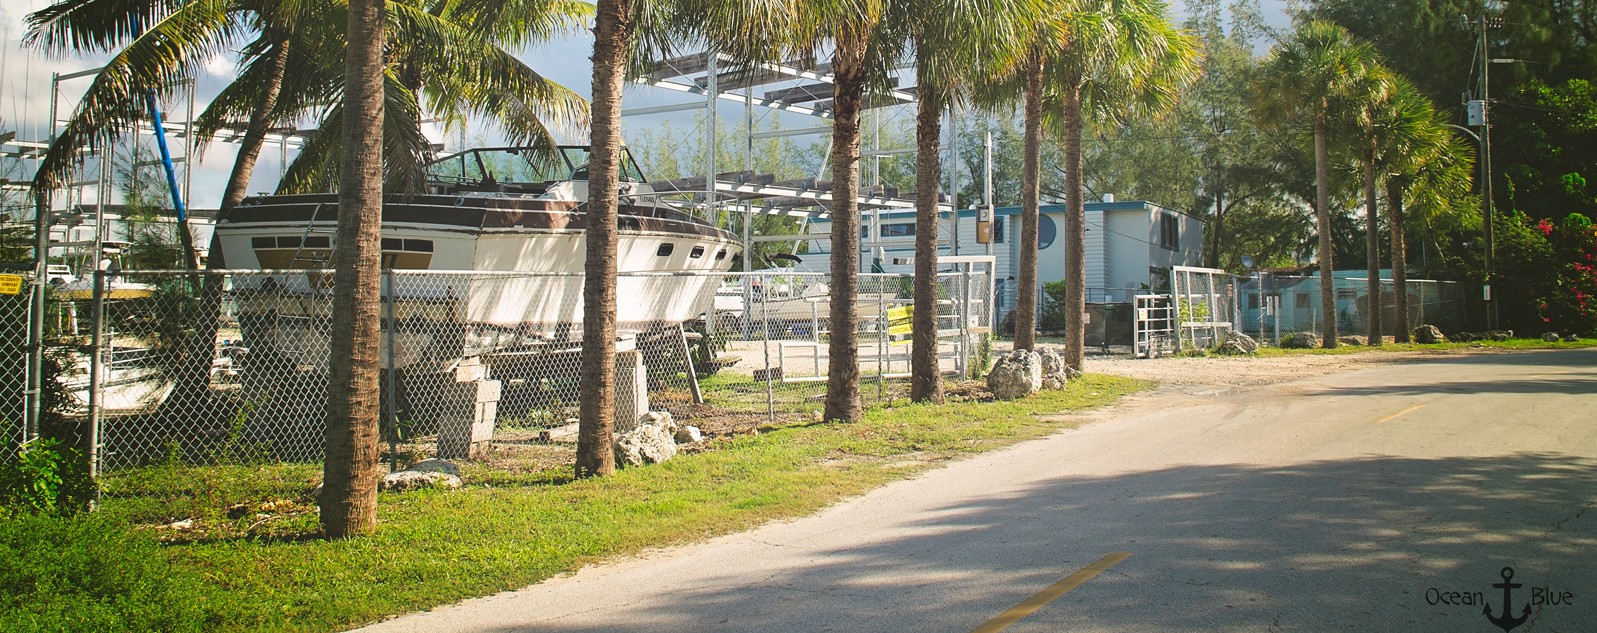 south florida boat ramp